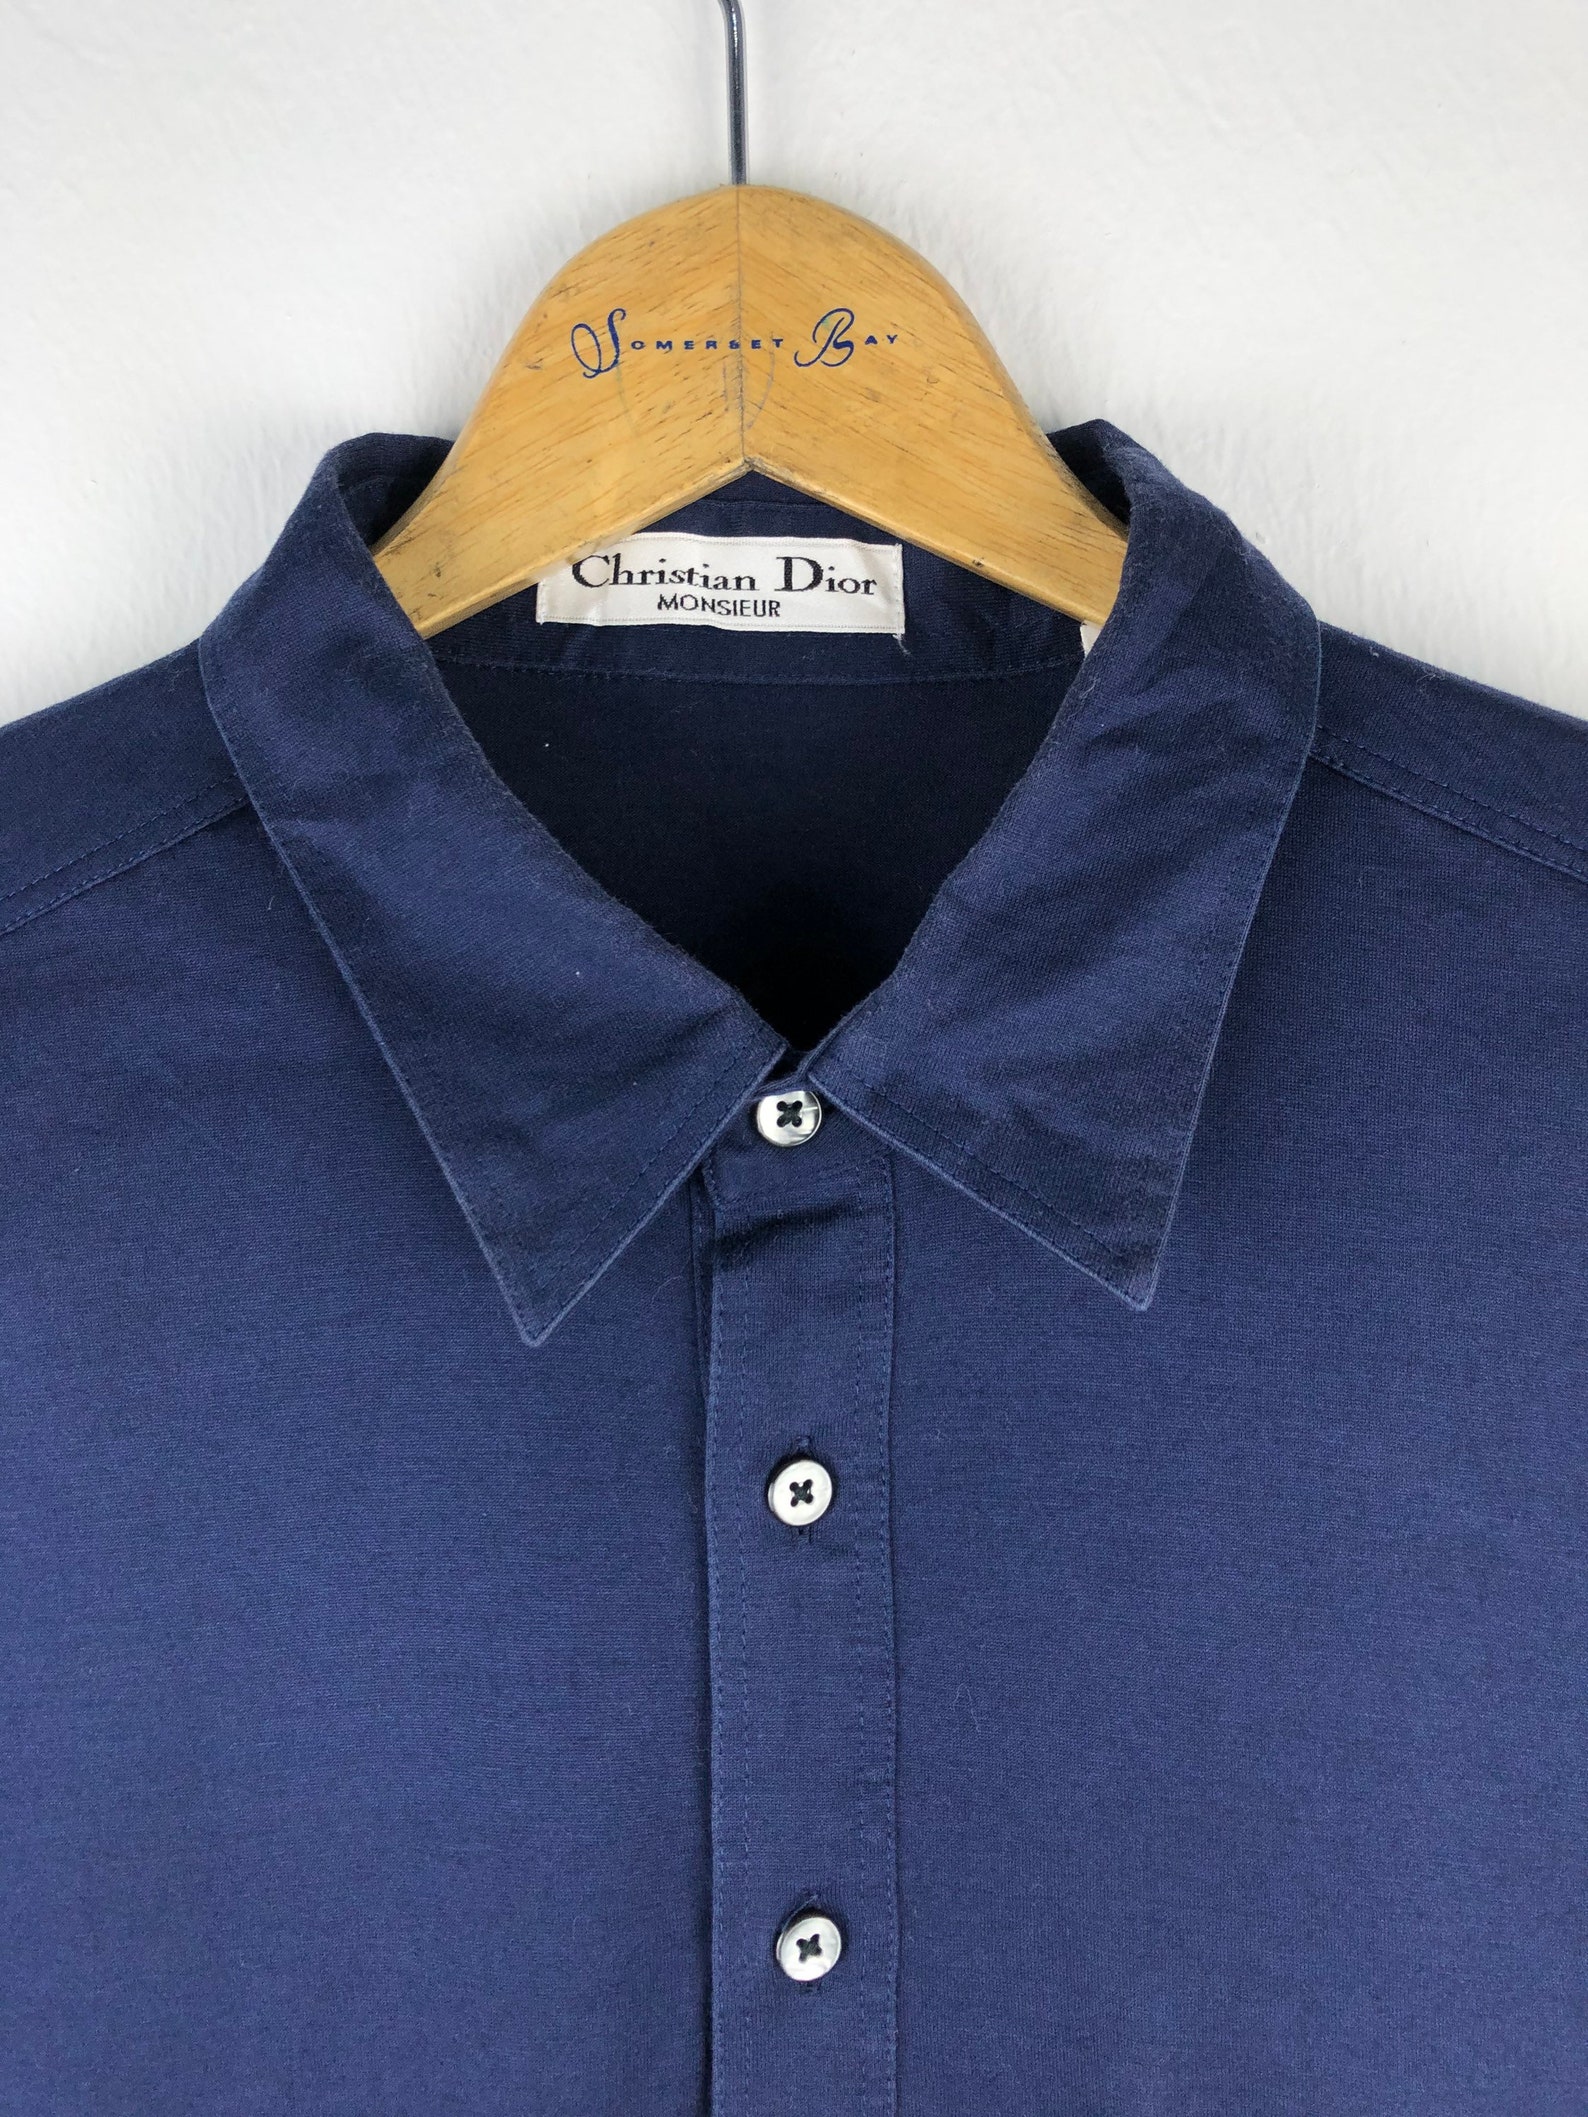 Vintage Christian Dior Monsieur Polo Shirt - Etsy UK